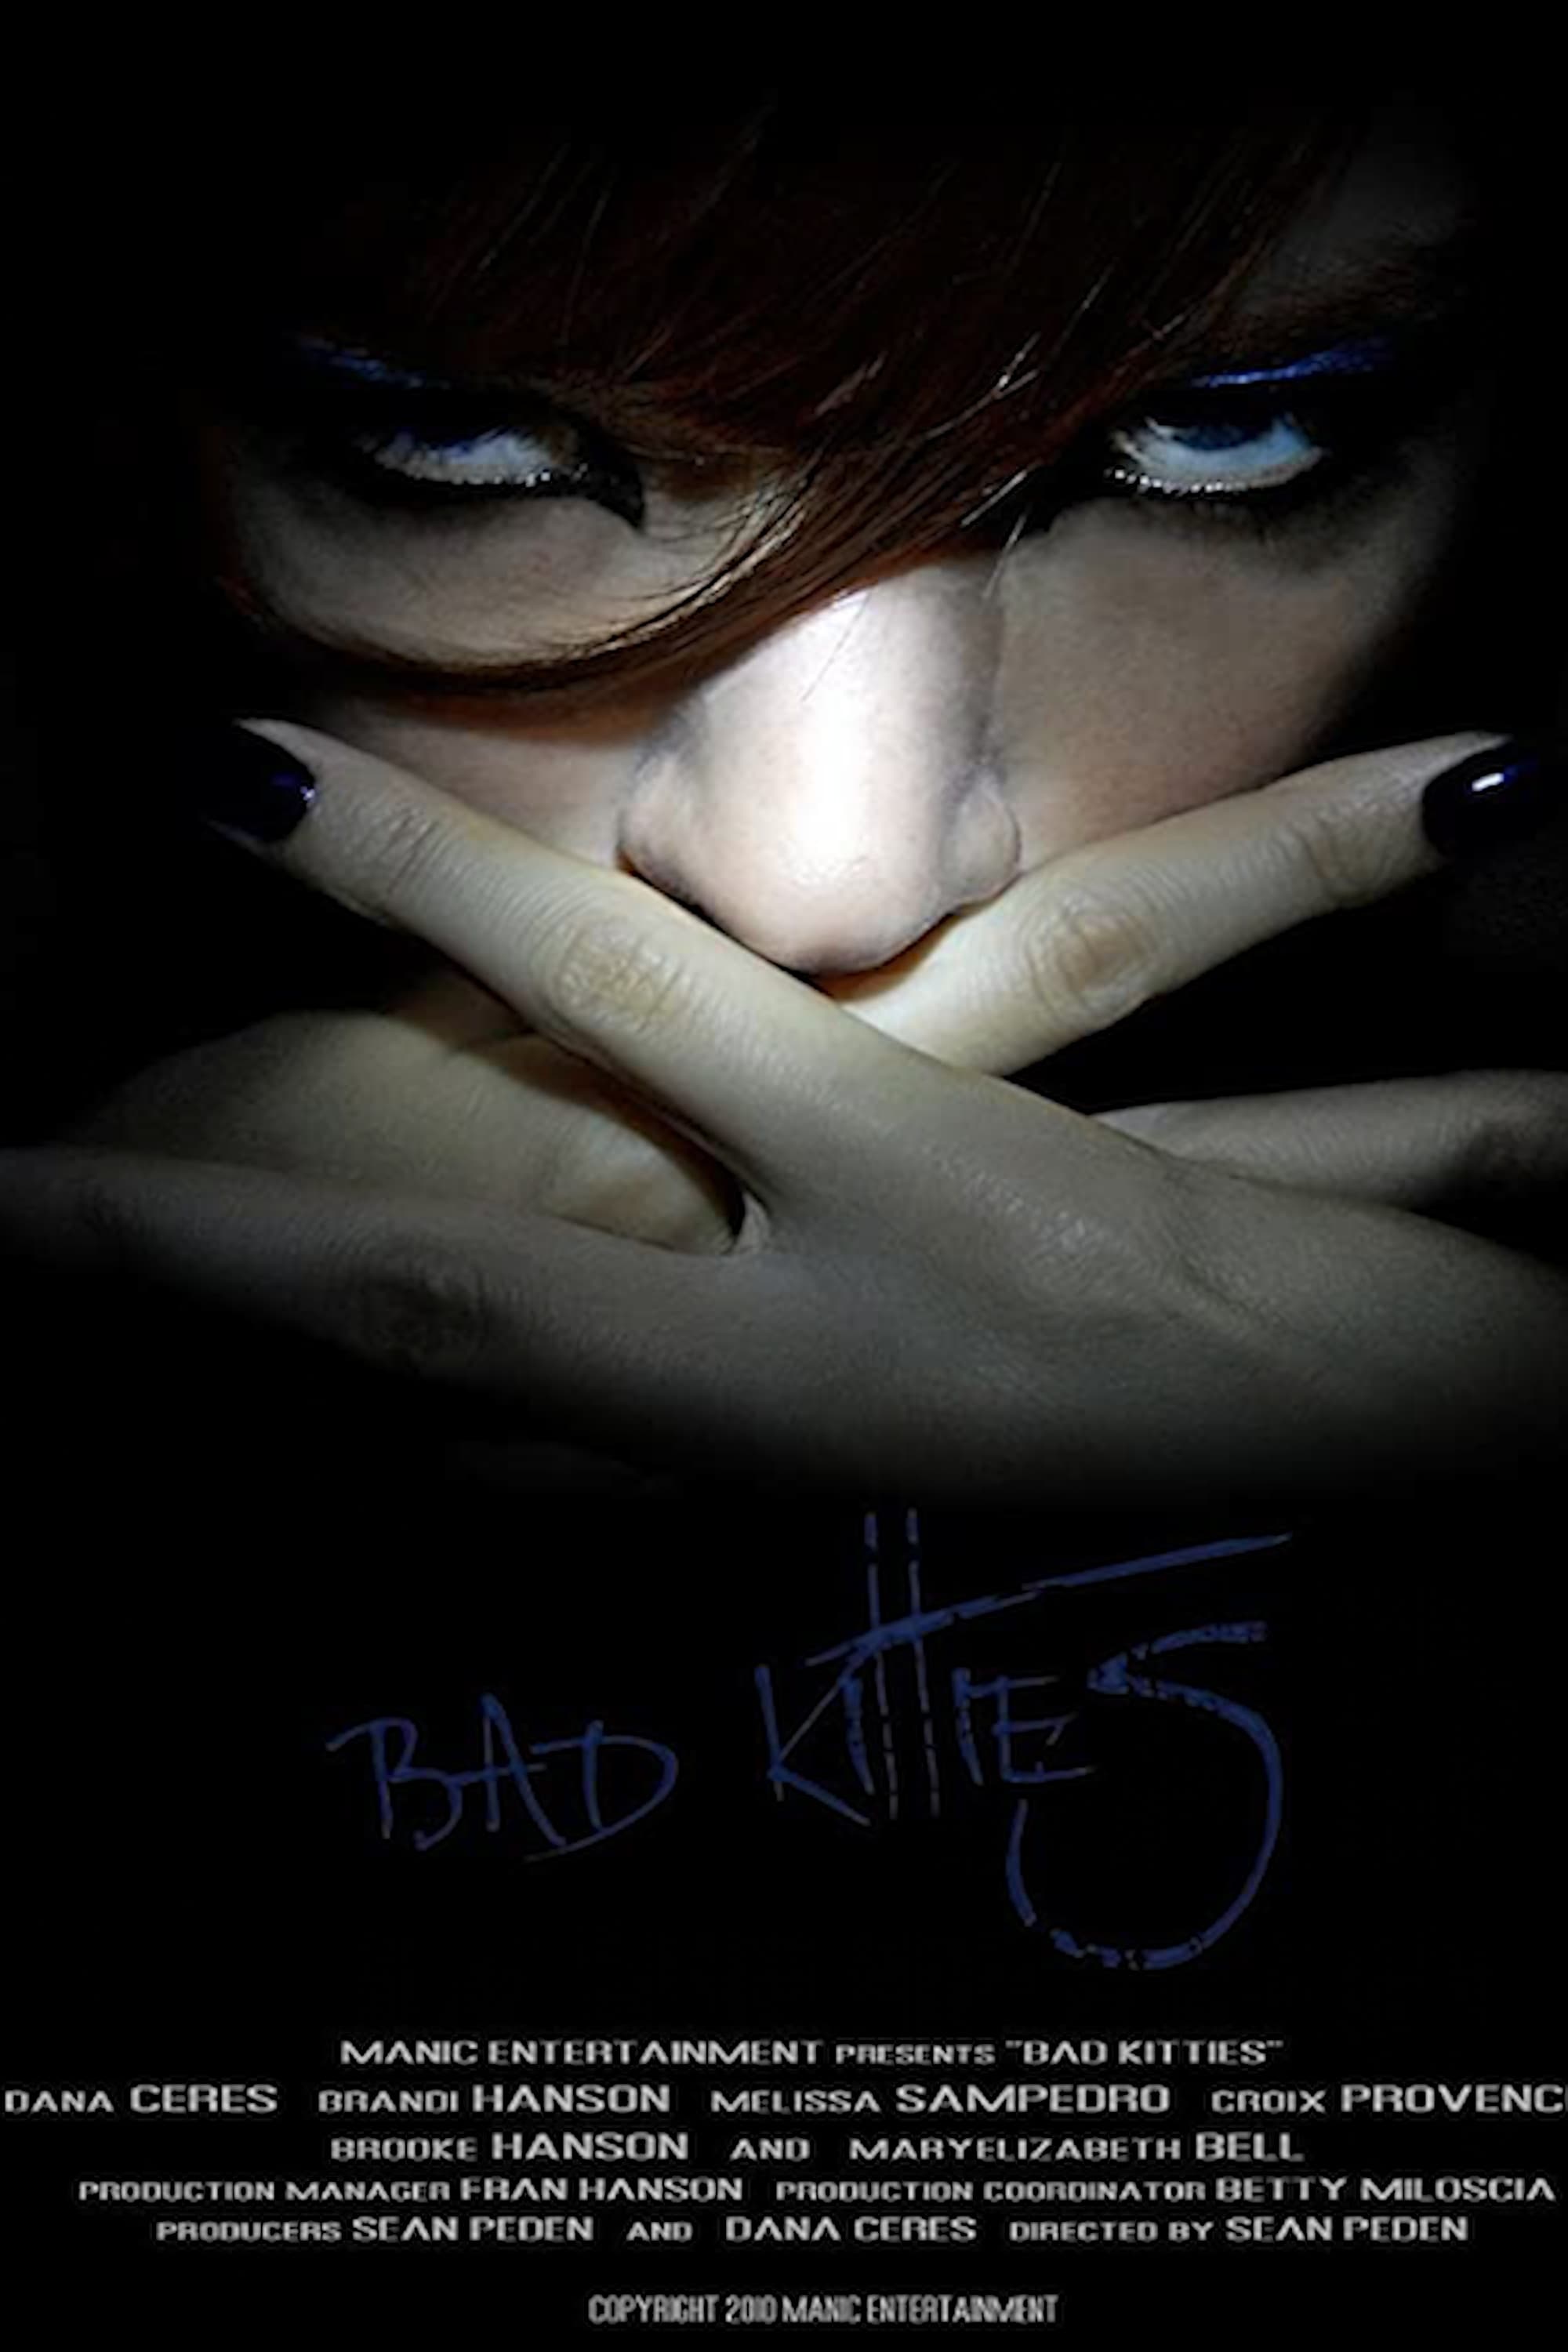 Bad Kitties